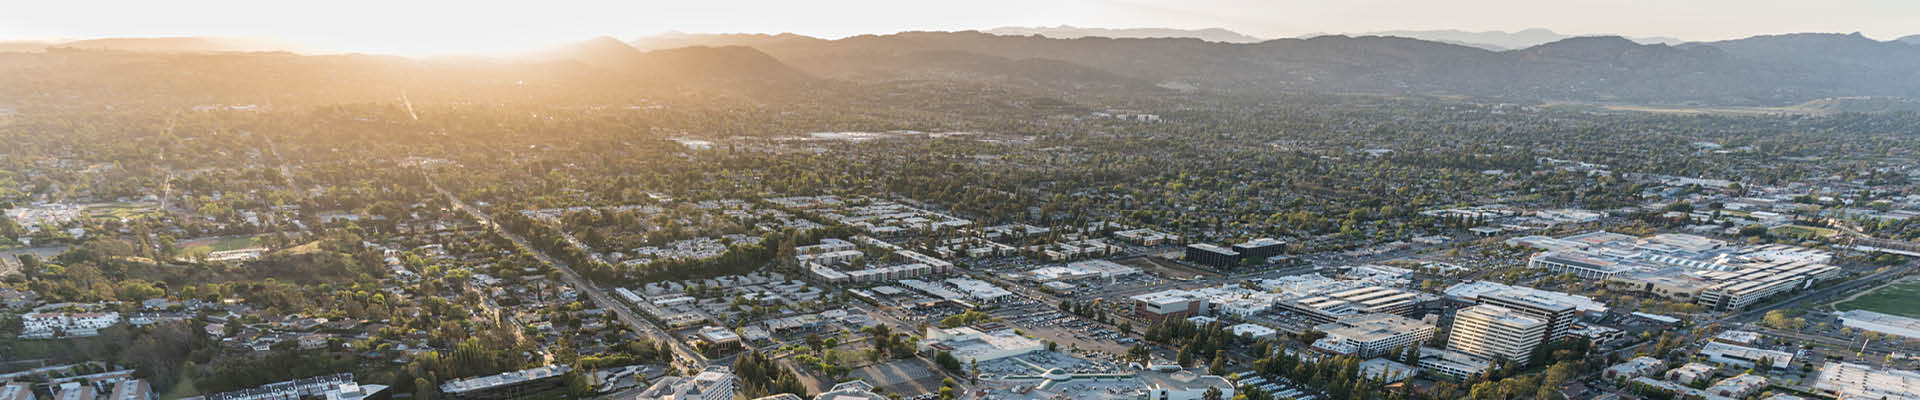 San Fernando Valley in California